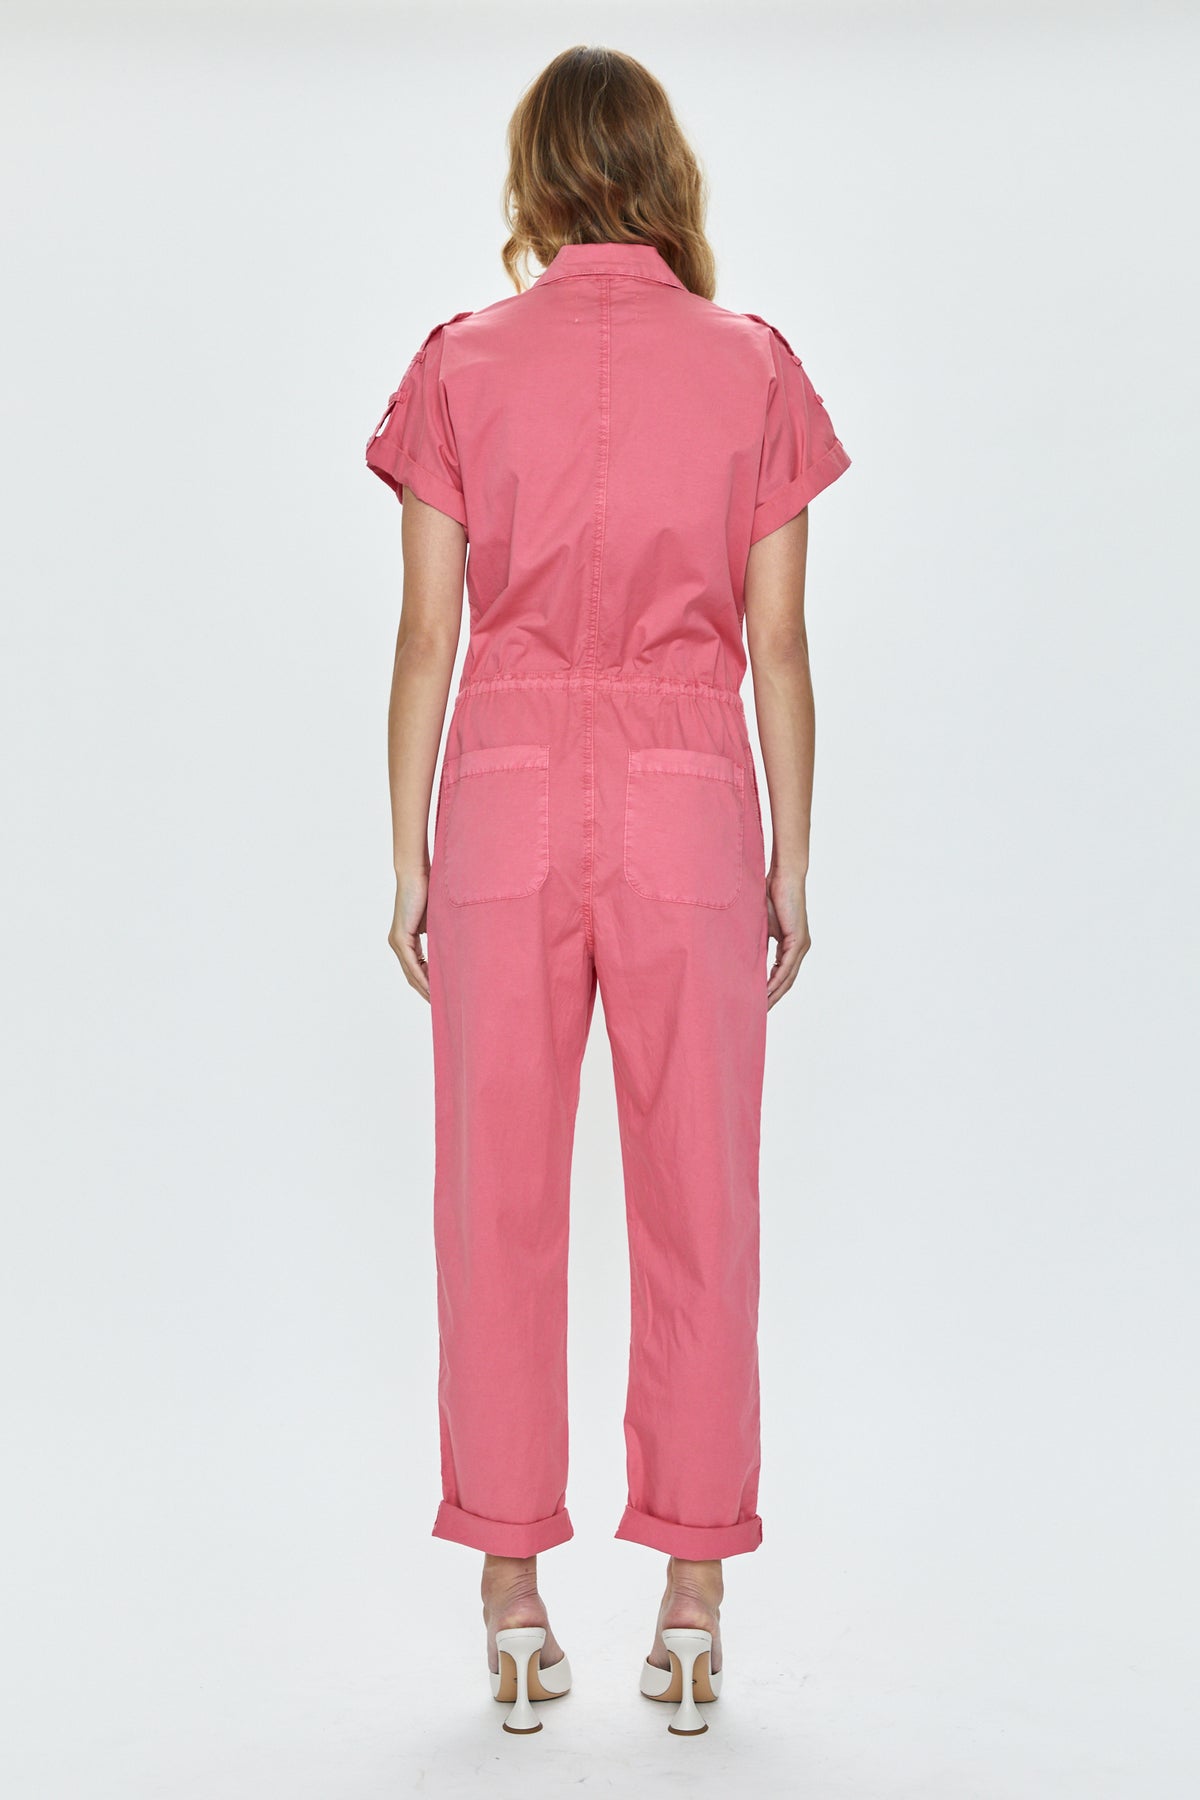 Jordan Short Sleeve Zip Front Jumpsuit - Pink Punch